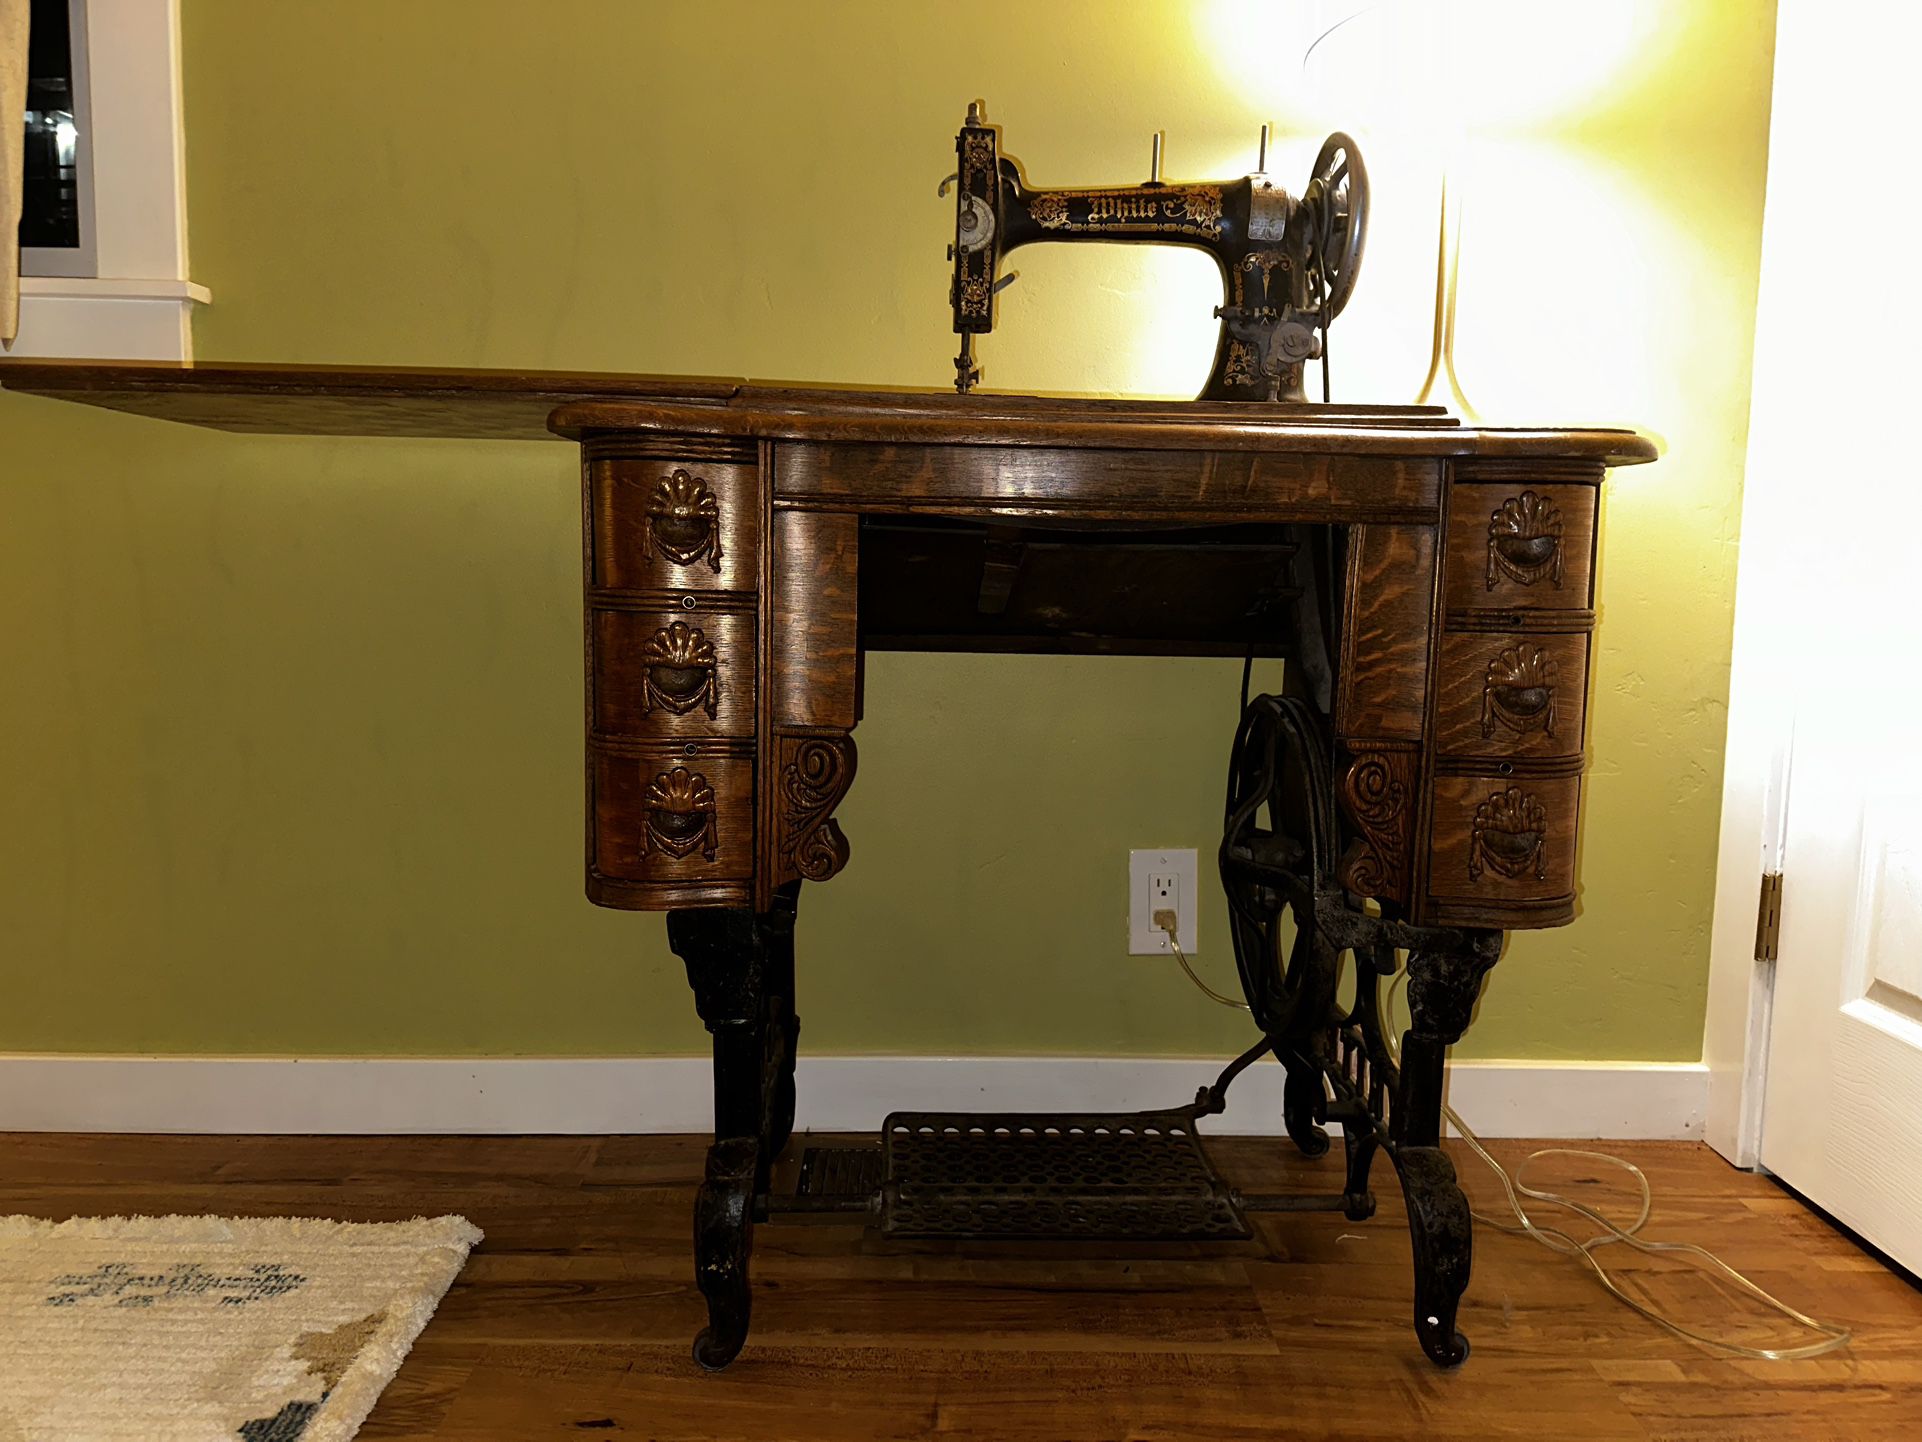 Vintage White treadle foot sewing machine, mahogany cabinet, original parts